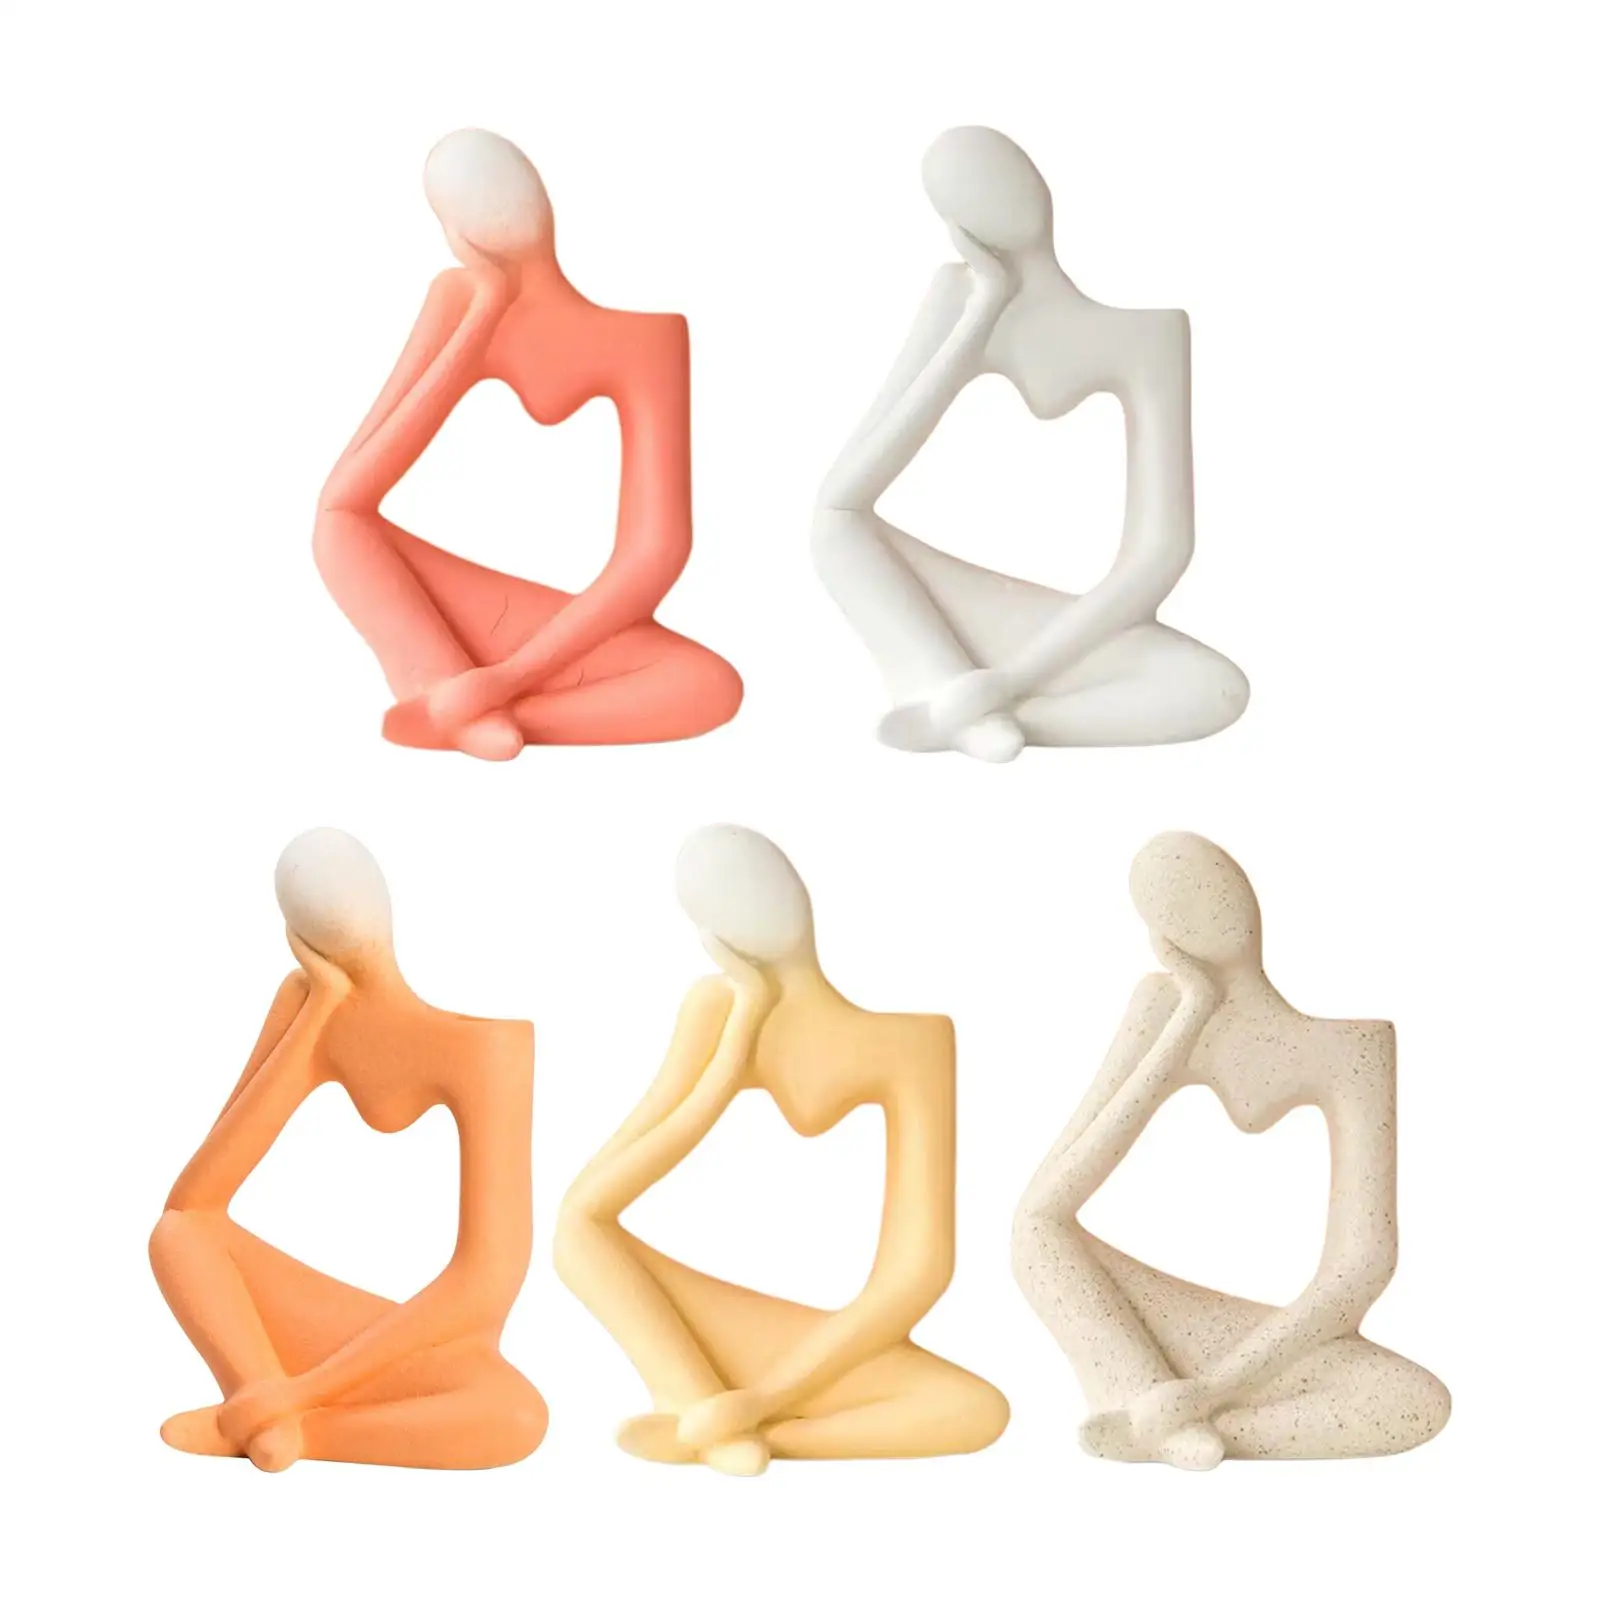 Nordic Ceramic Vase Thinker Statue Sculpture Crafts Ornament Collectible for Desktop Office Living TV Cabinet Decor